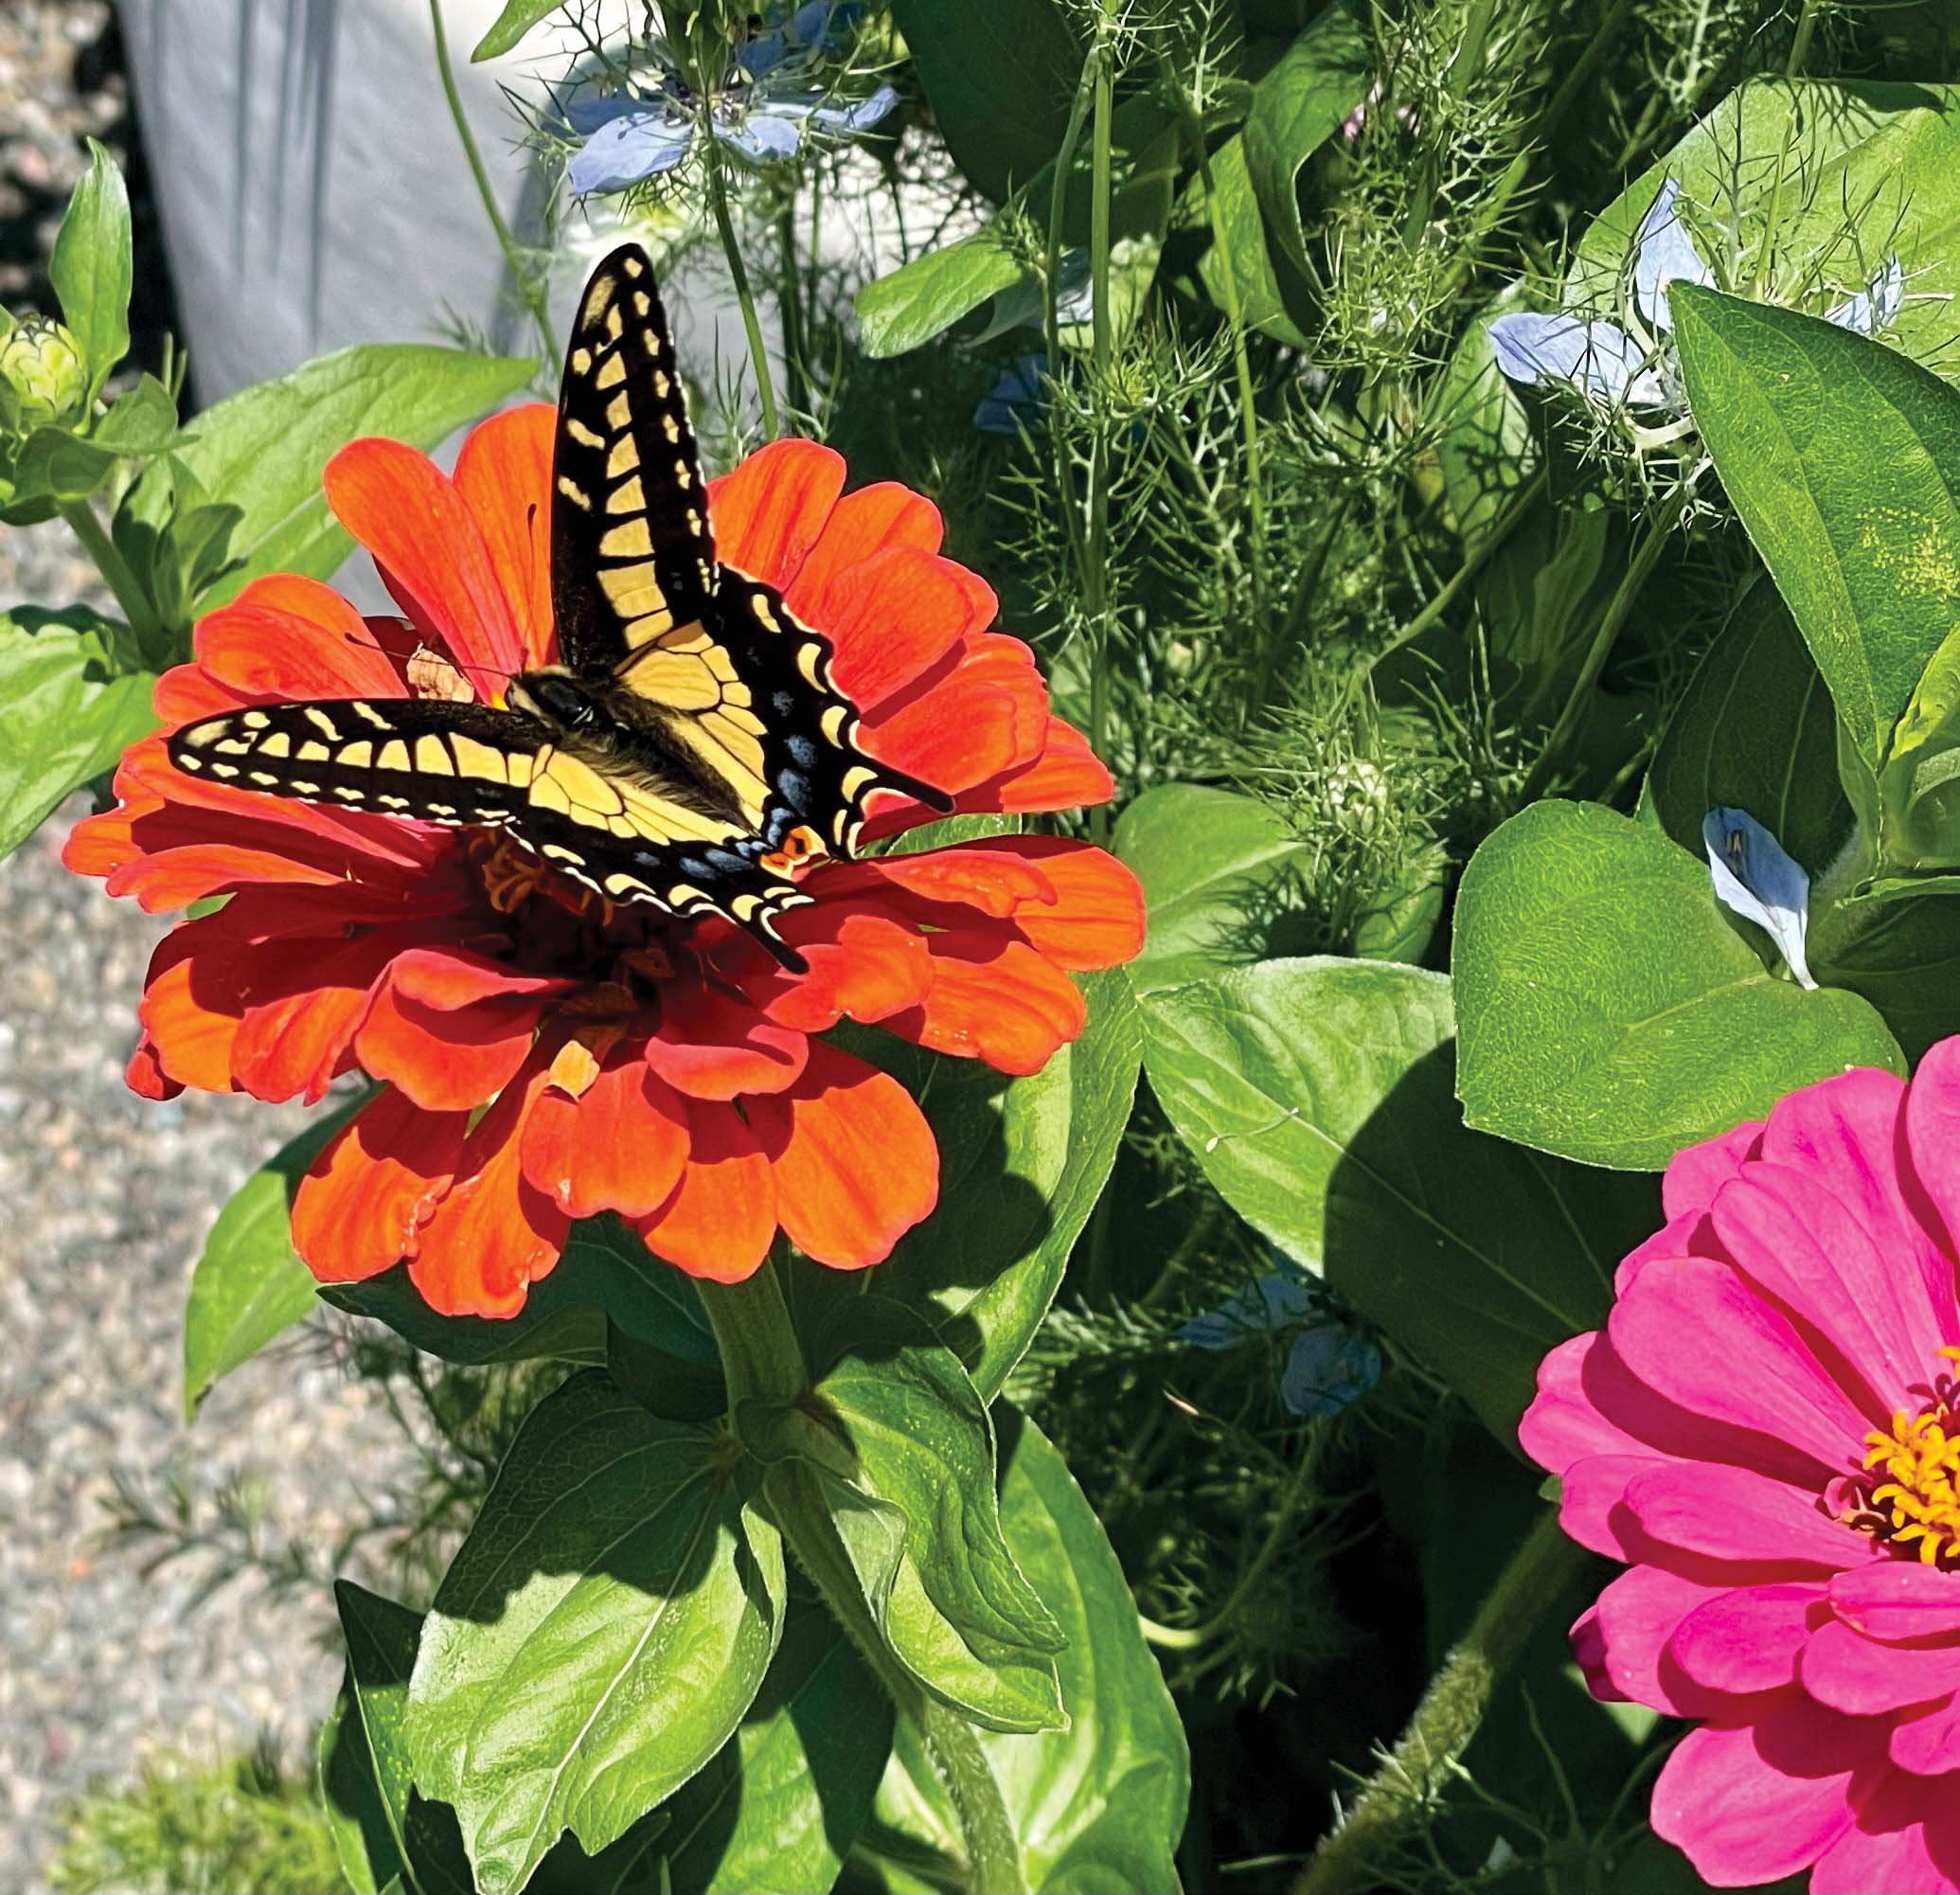  Swallowtail butterfly in the Dawn Ranch Kitchen Garden.  Photo by Jefferson Finney  